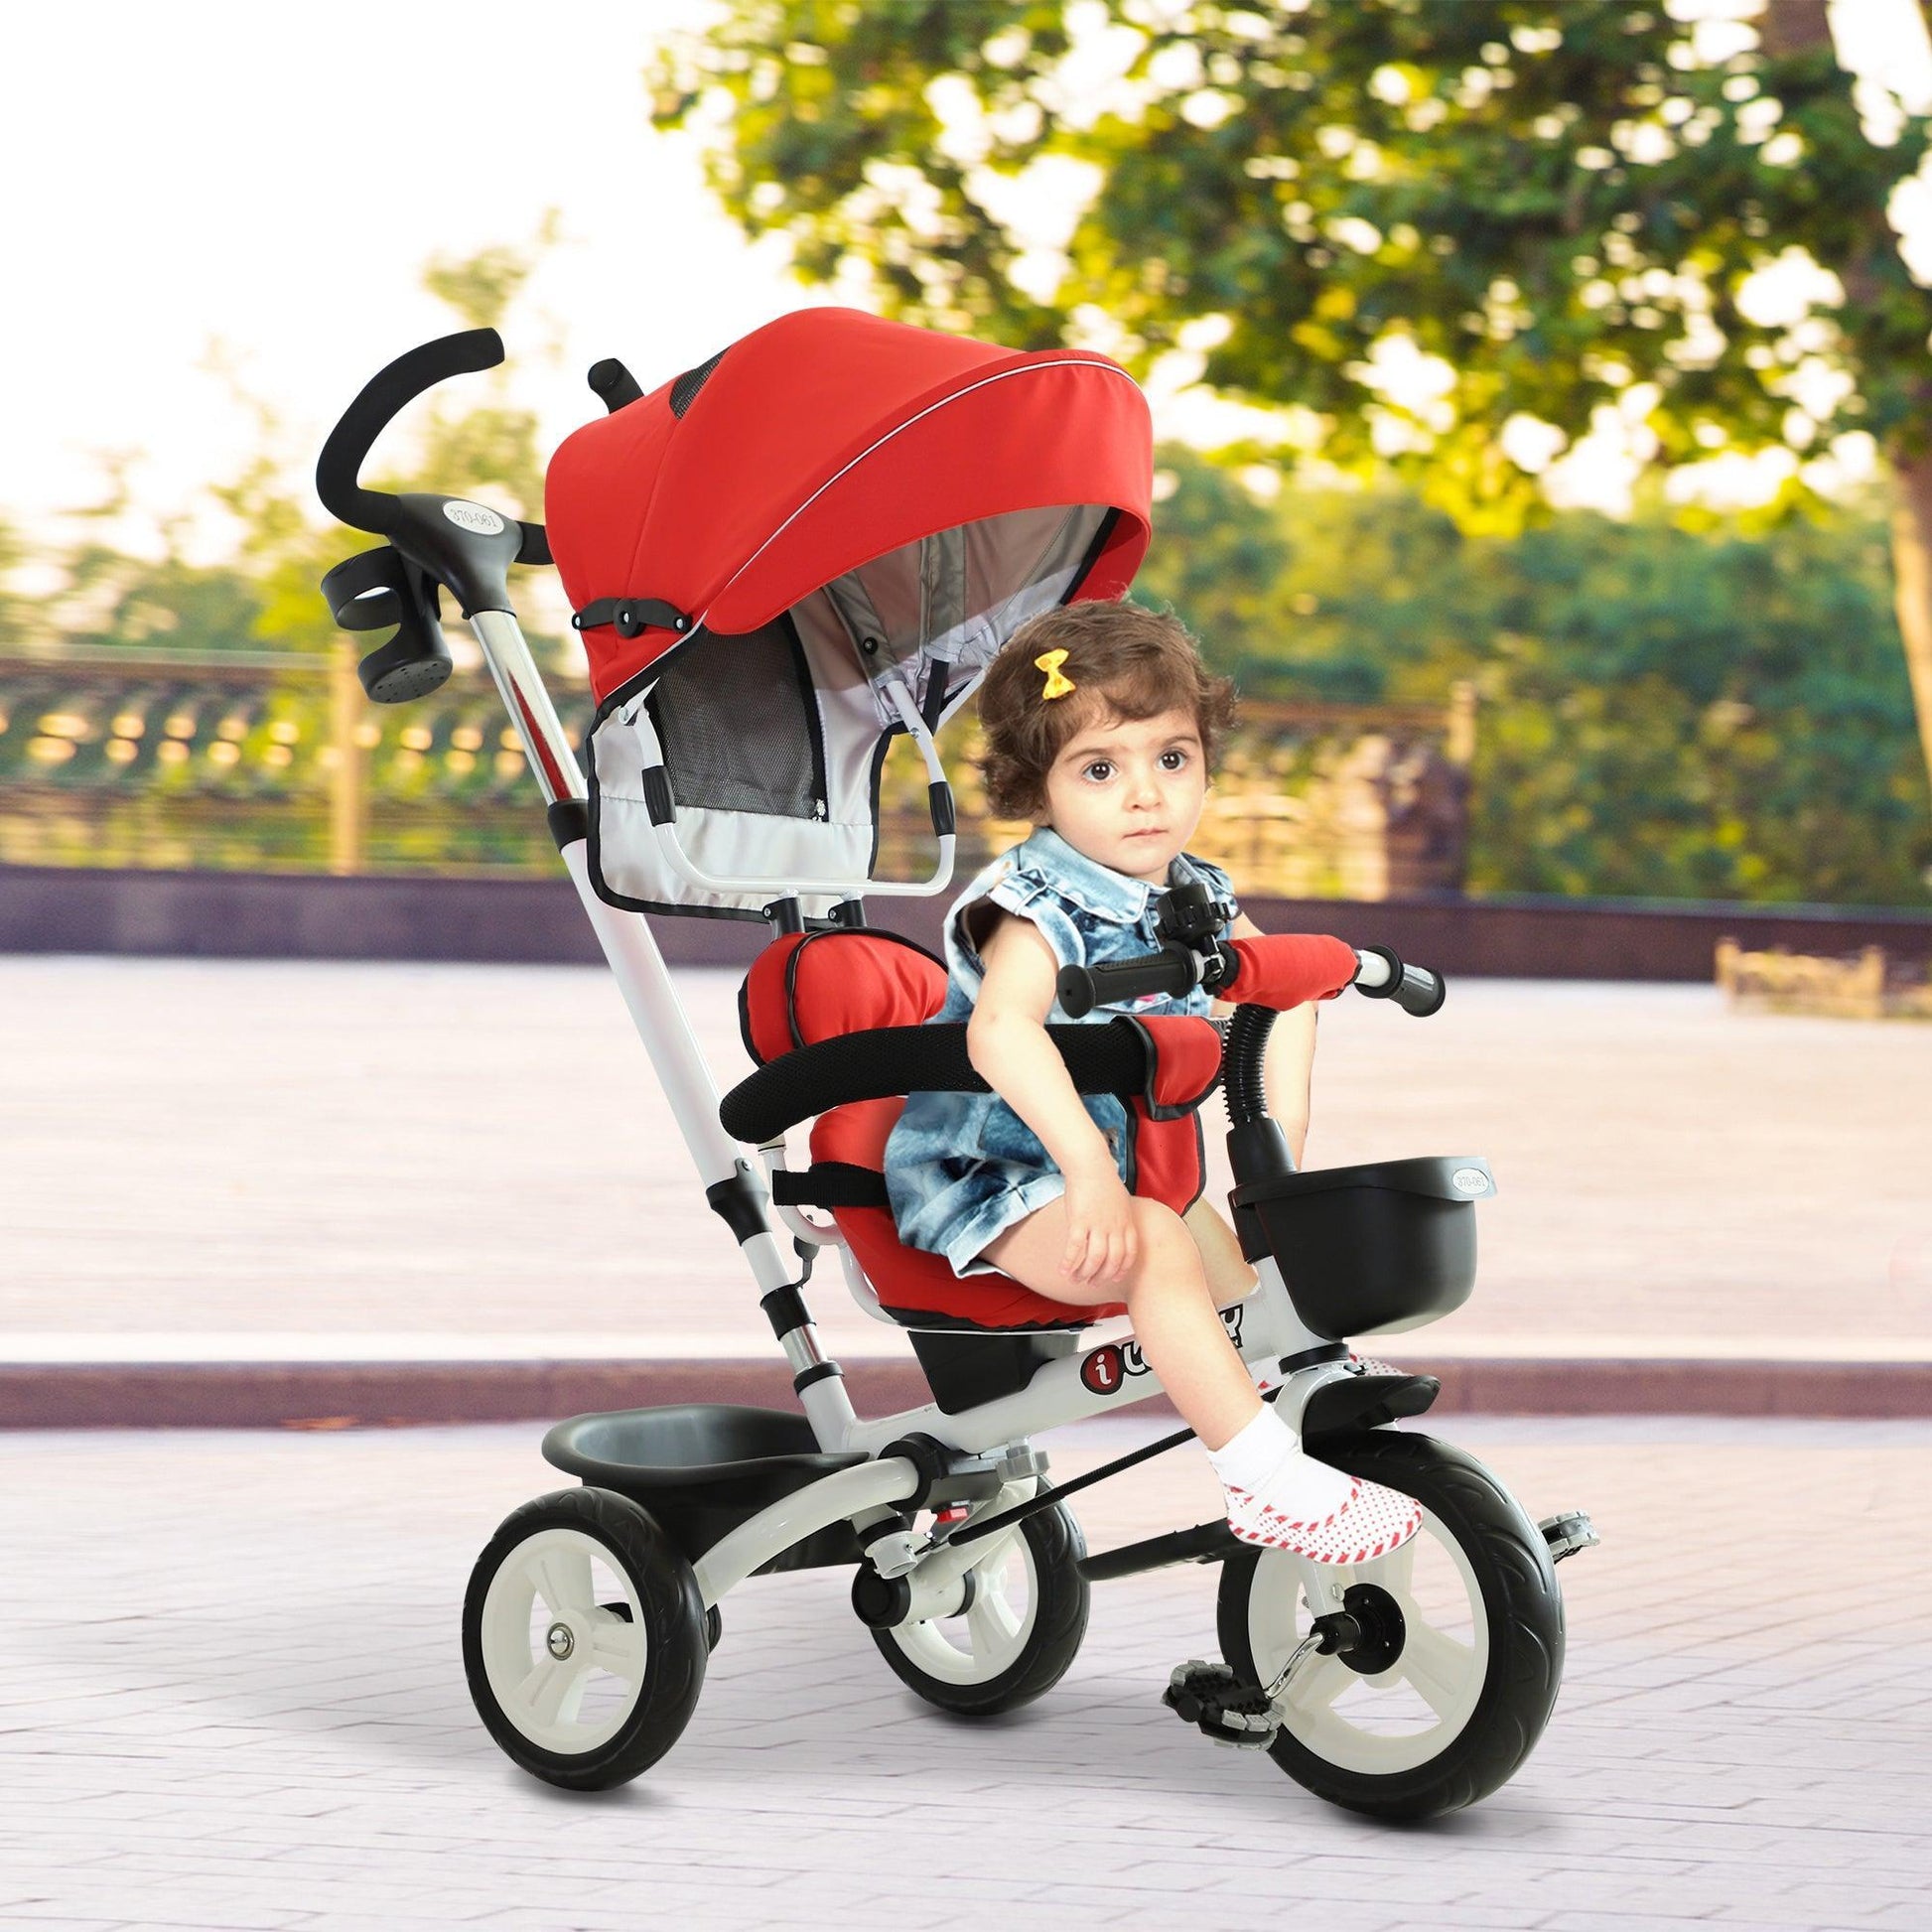 HOMCOM Kids Tricycle Stroller: 4-in-1, Red, Canopy - ALL4U RETAILER LTD